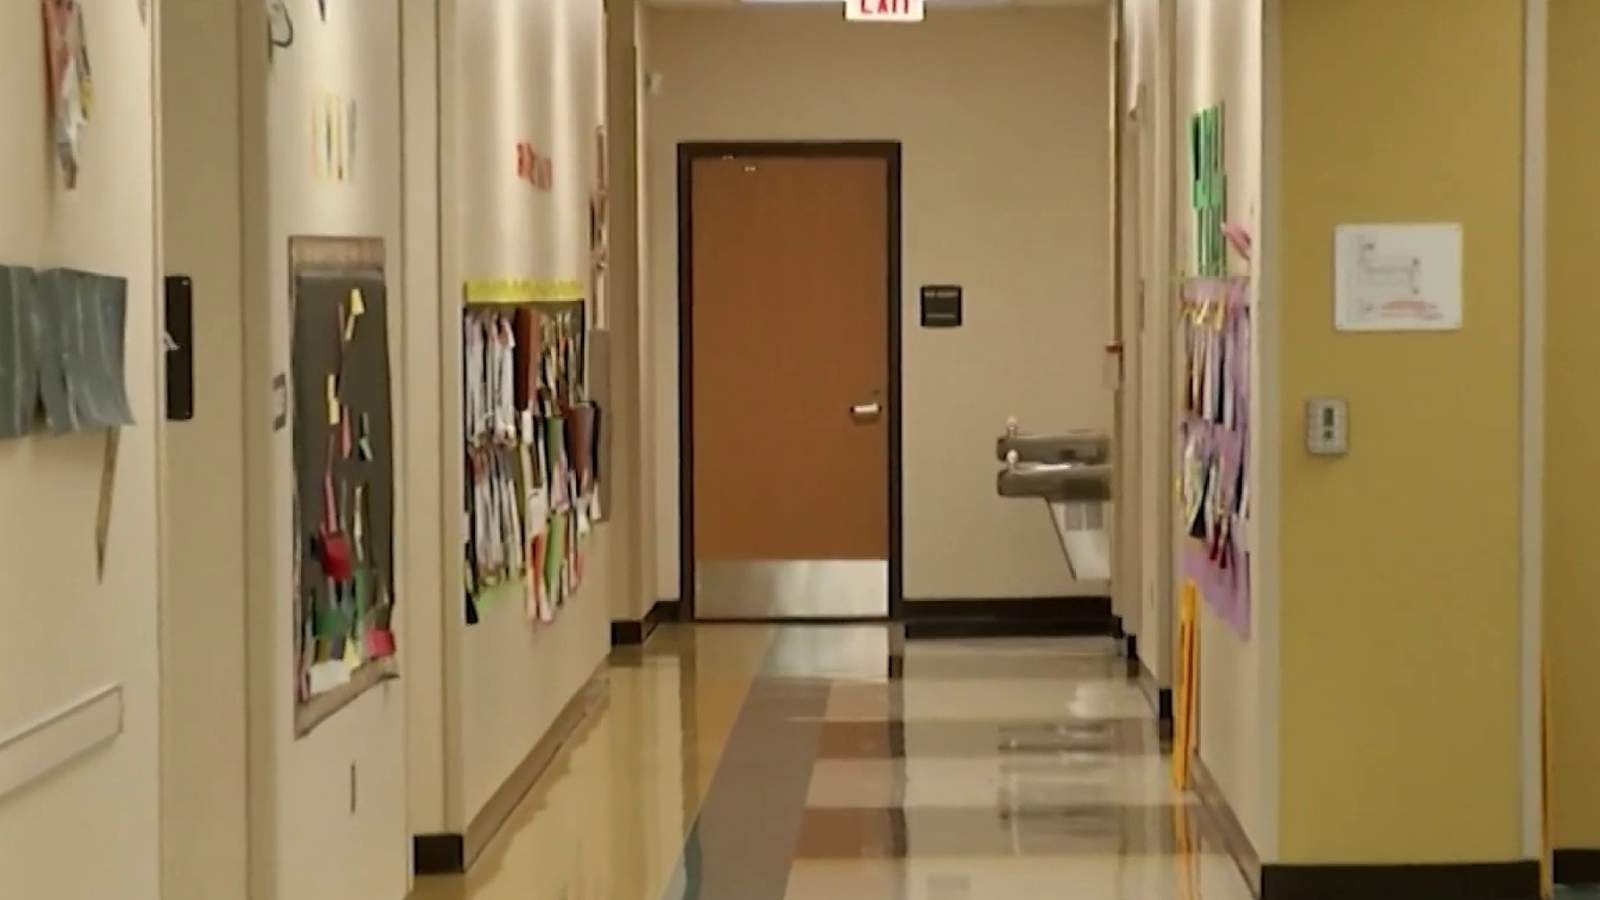 Despite schools COVID-19 dashboard, Orange County teachers union says more transparency needed